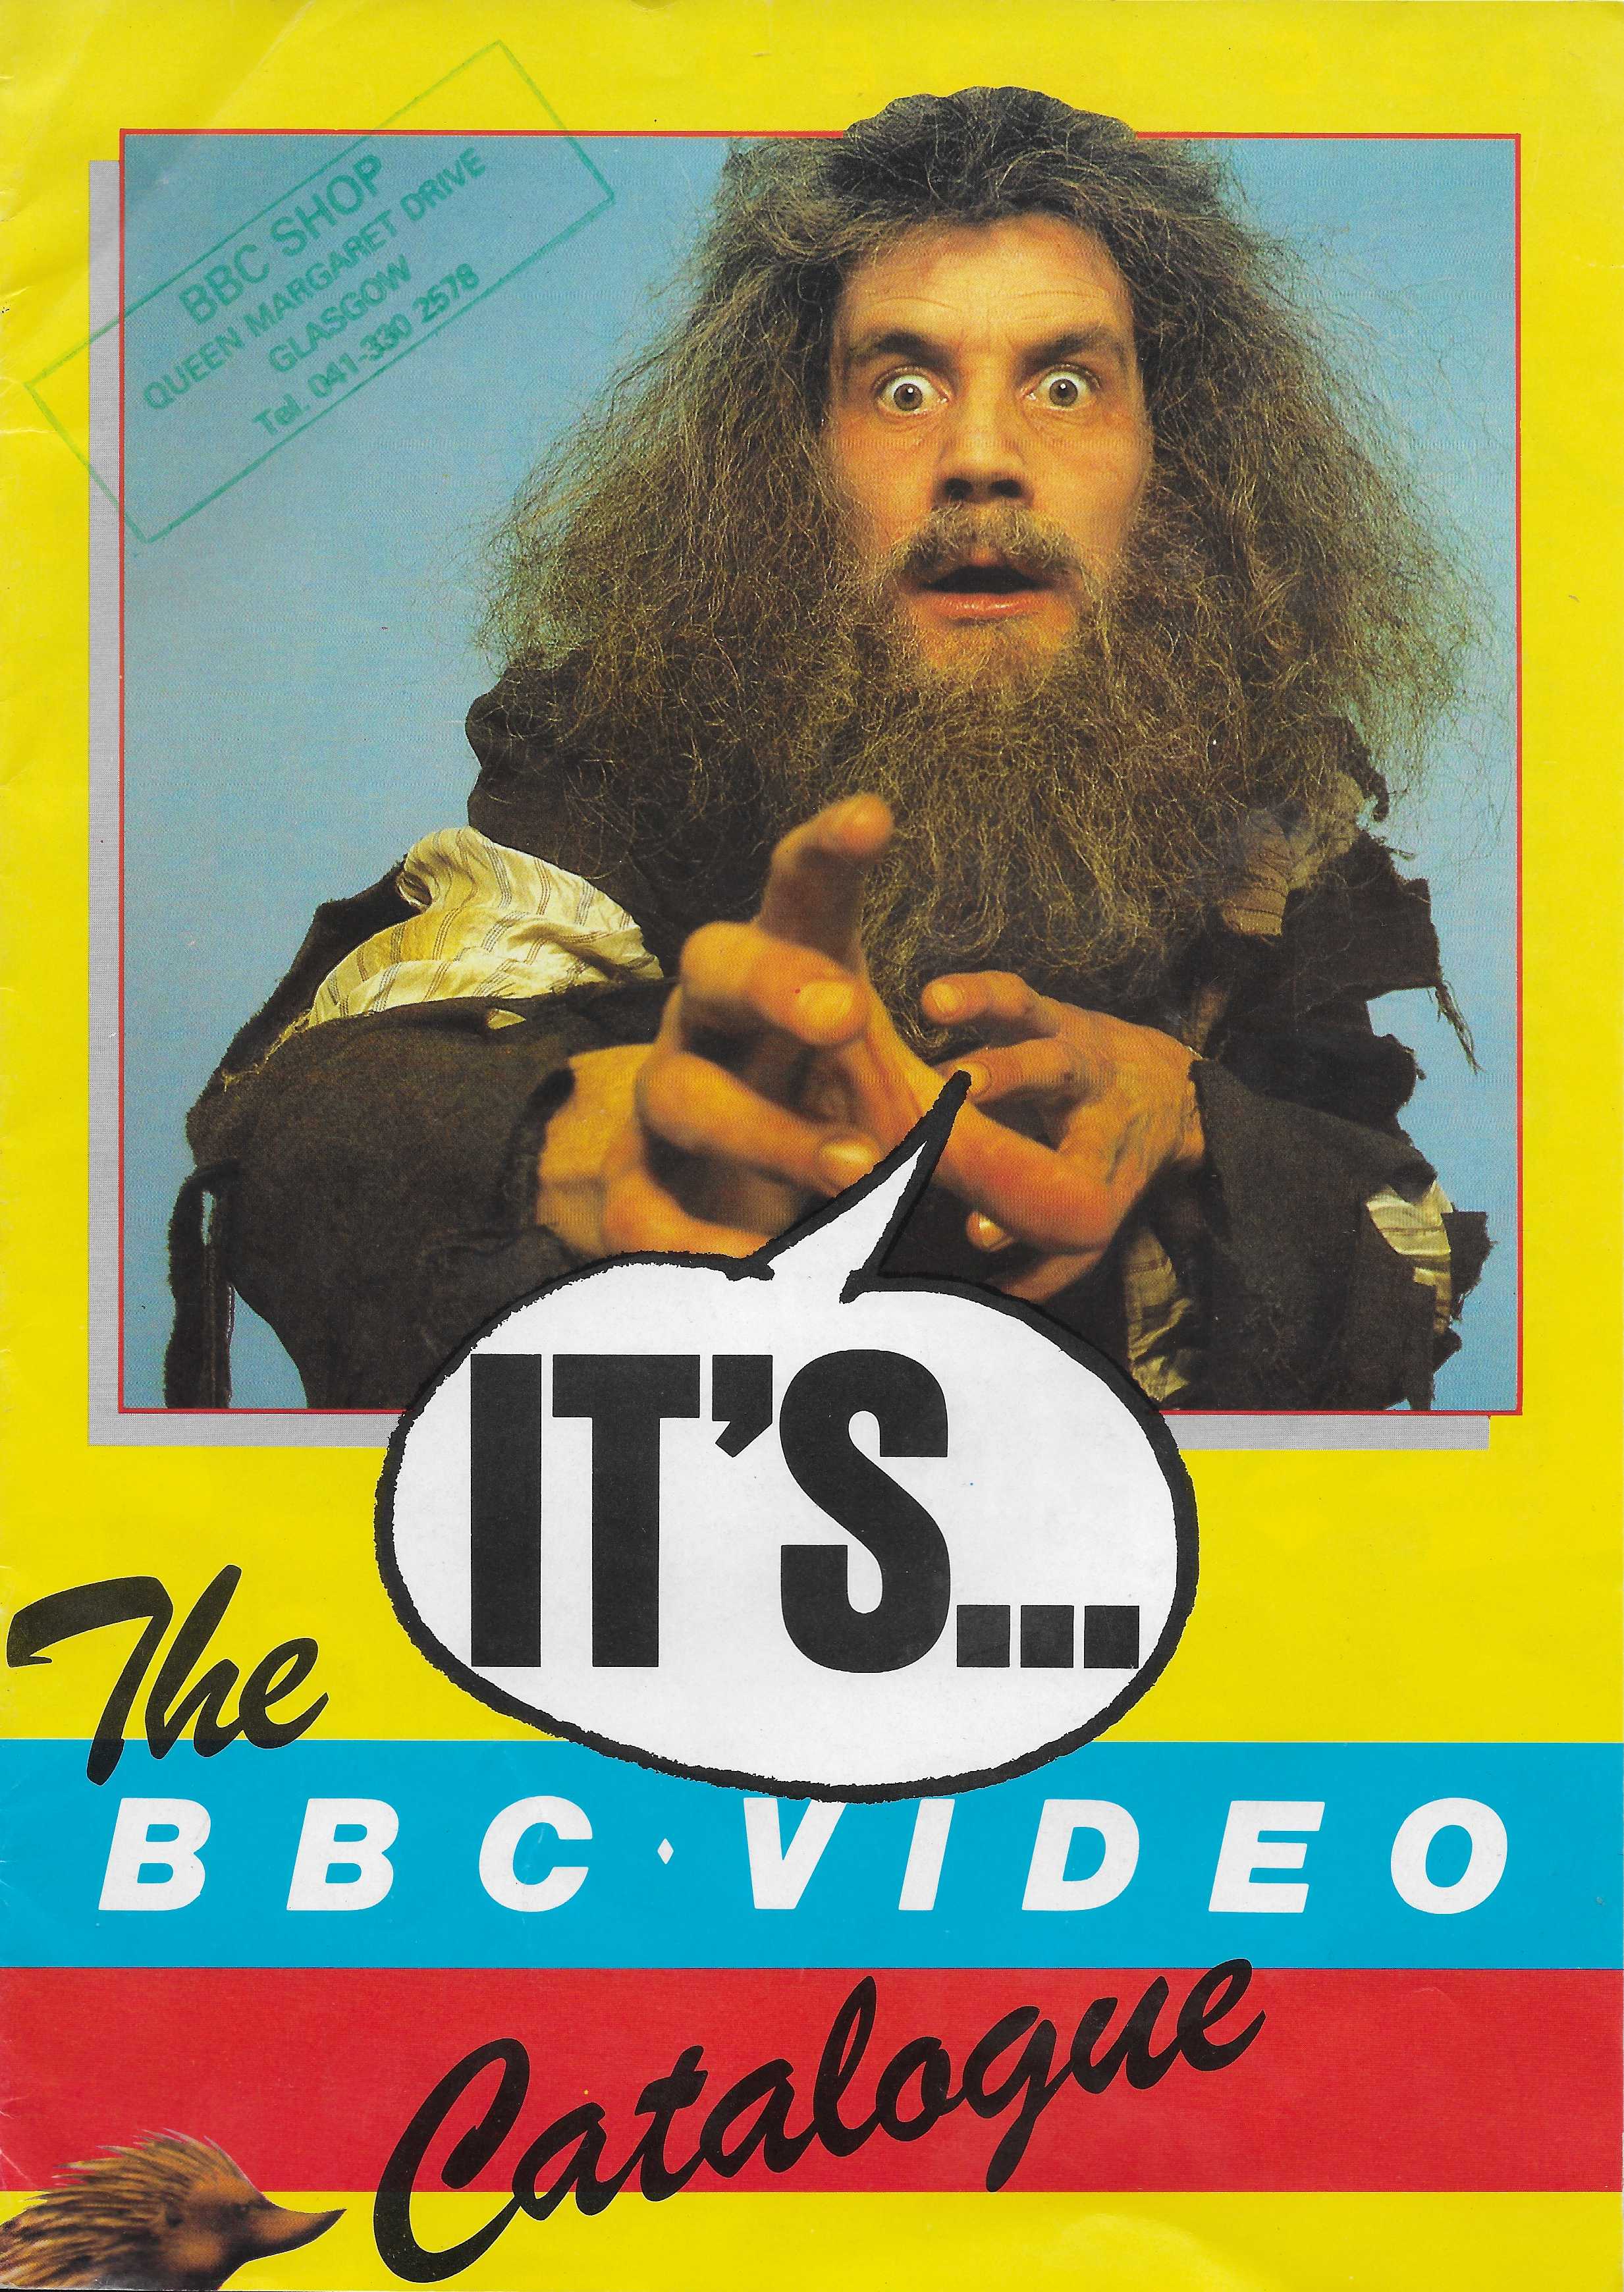 BBC Video catalogue 1985.